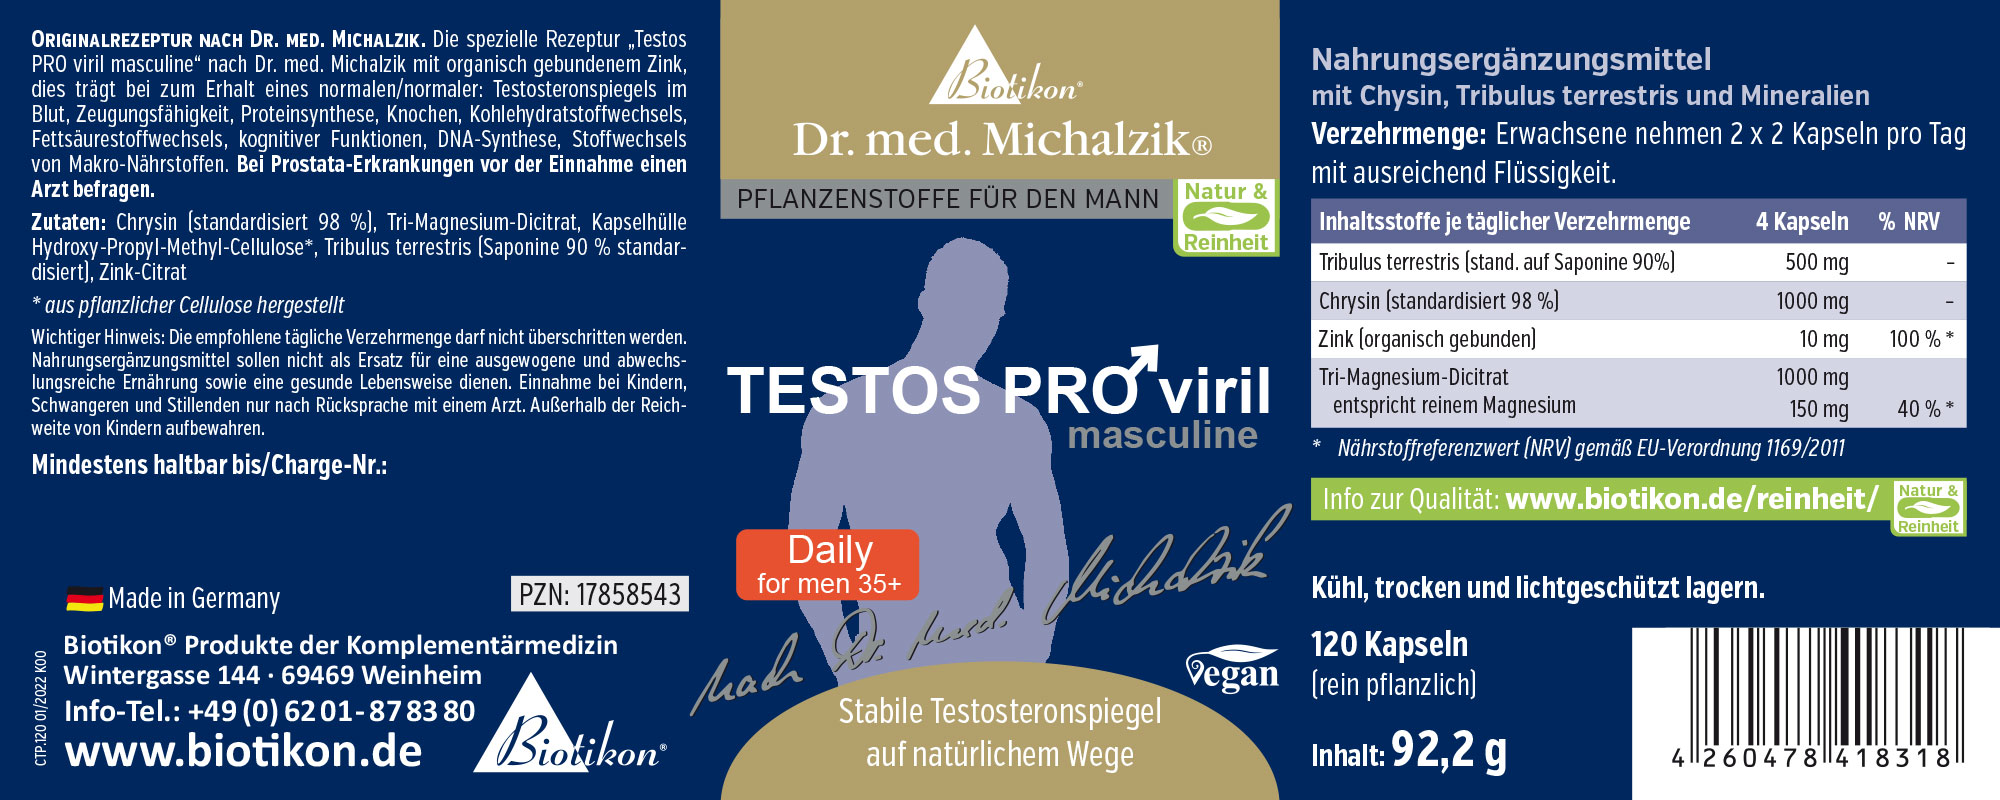 Testos PRO viril masculine nach Dr. med. Michalzik